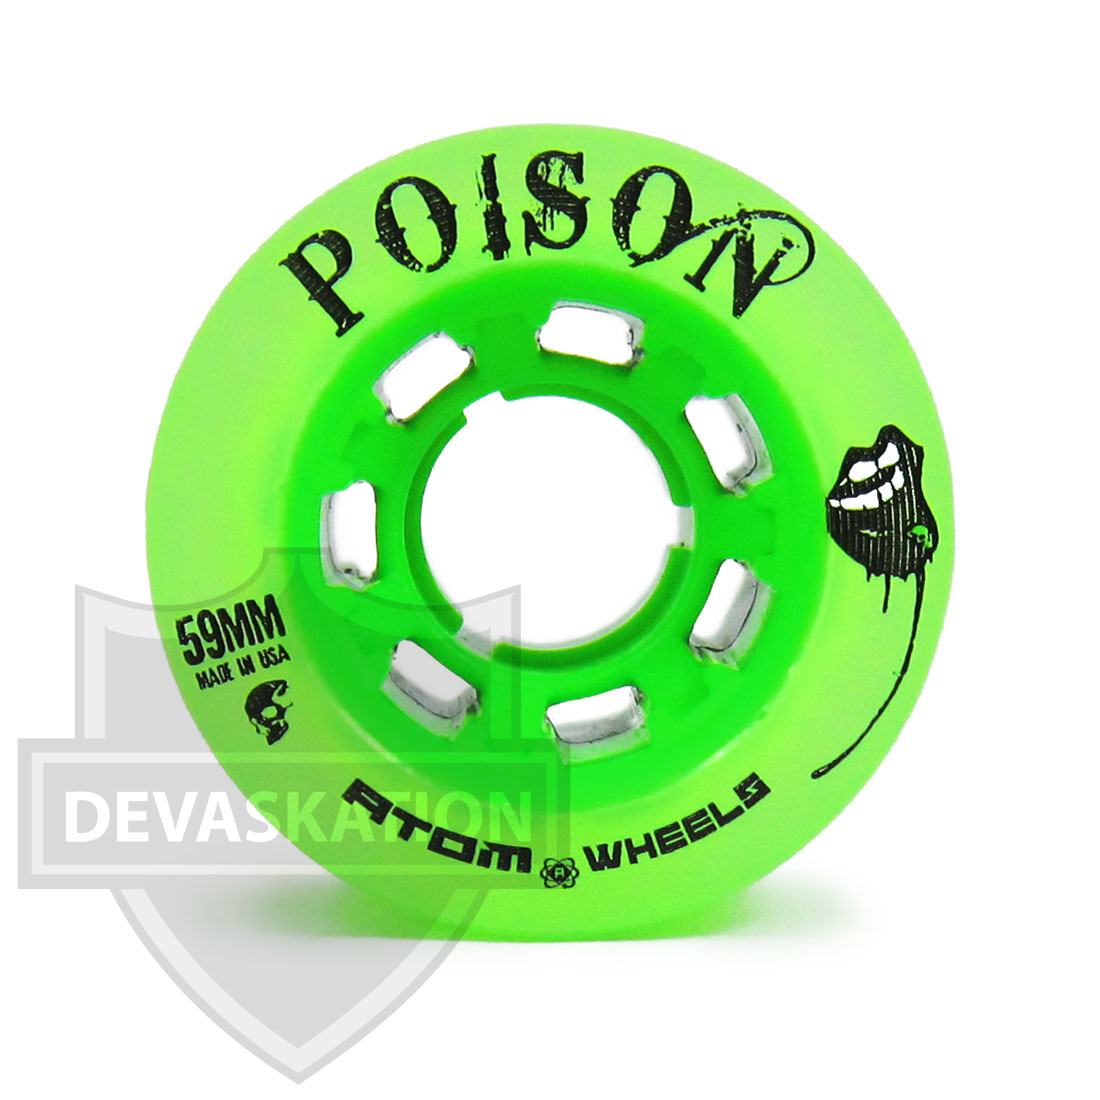 Narrow Width Atom Poison Hybrid Skate Wheels with Bionic 8mm Bearings 